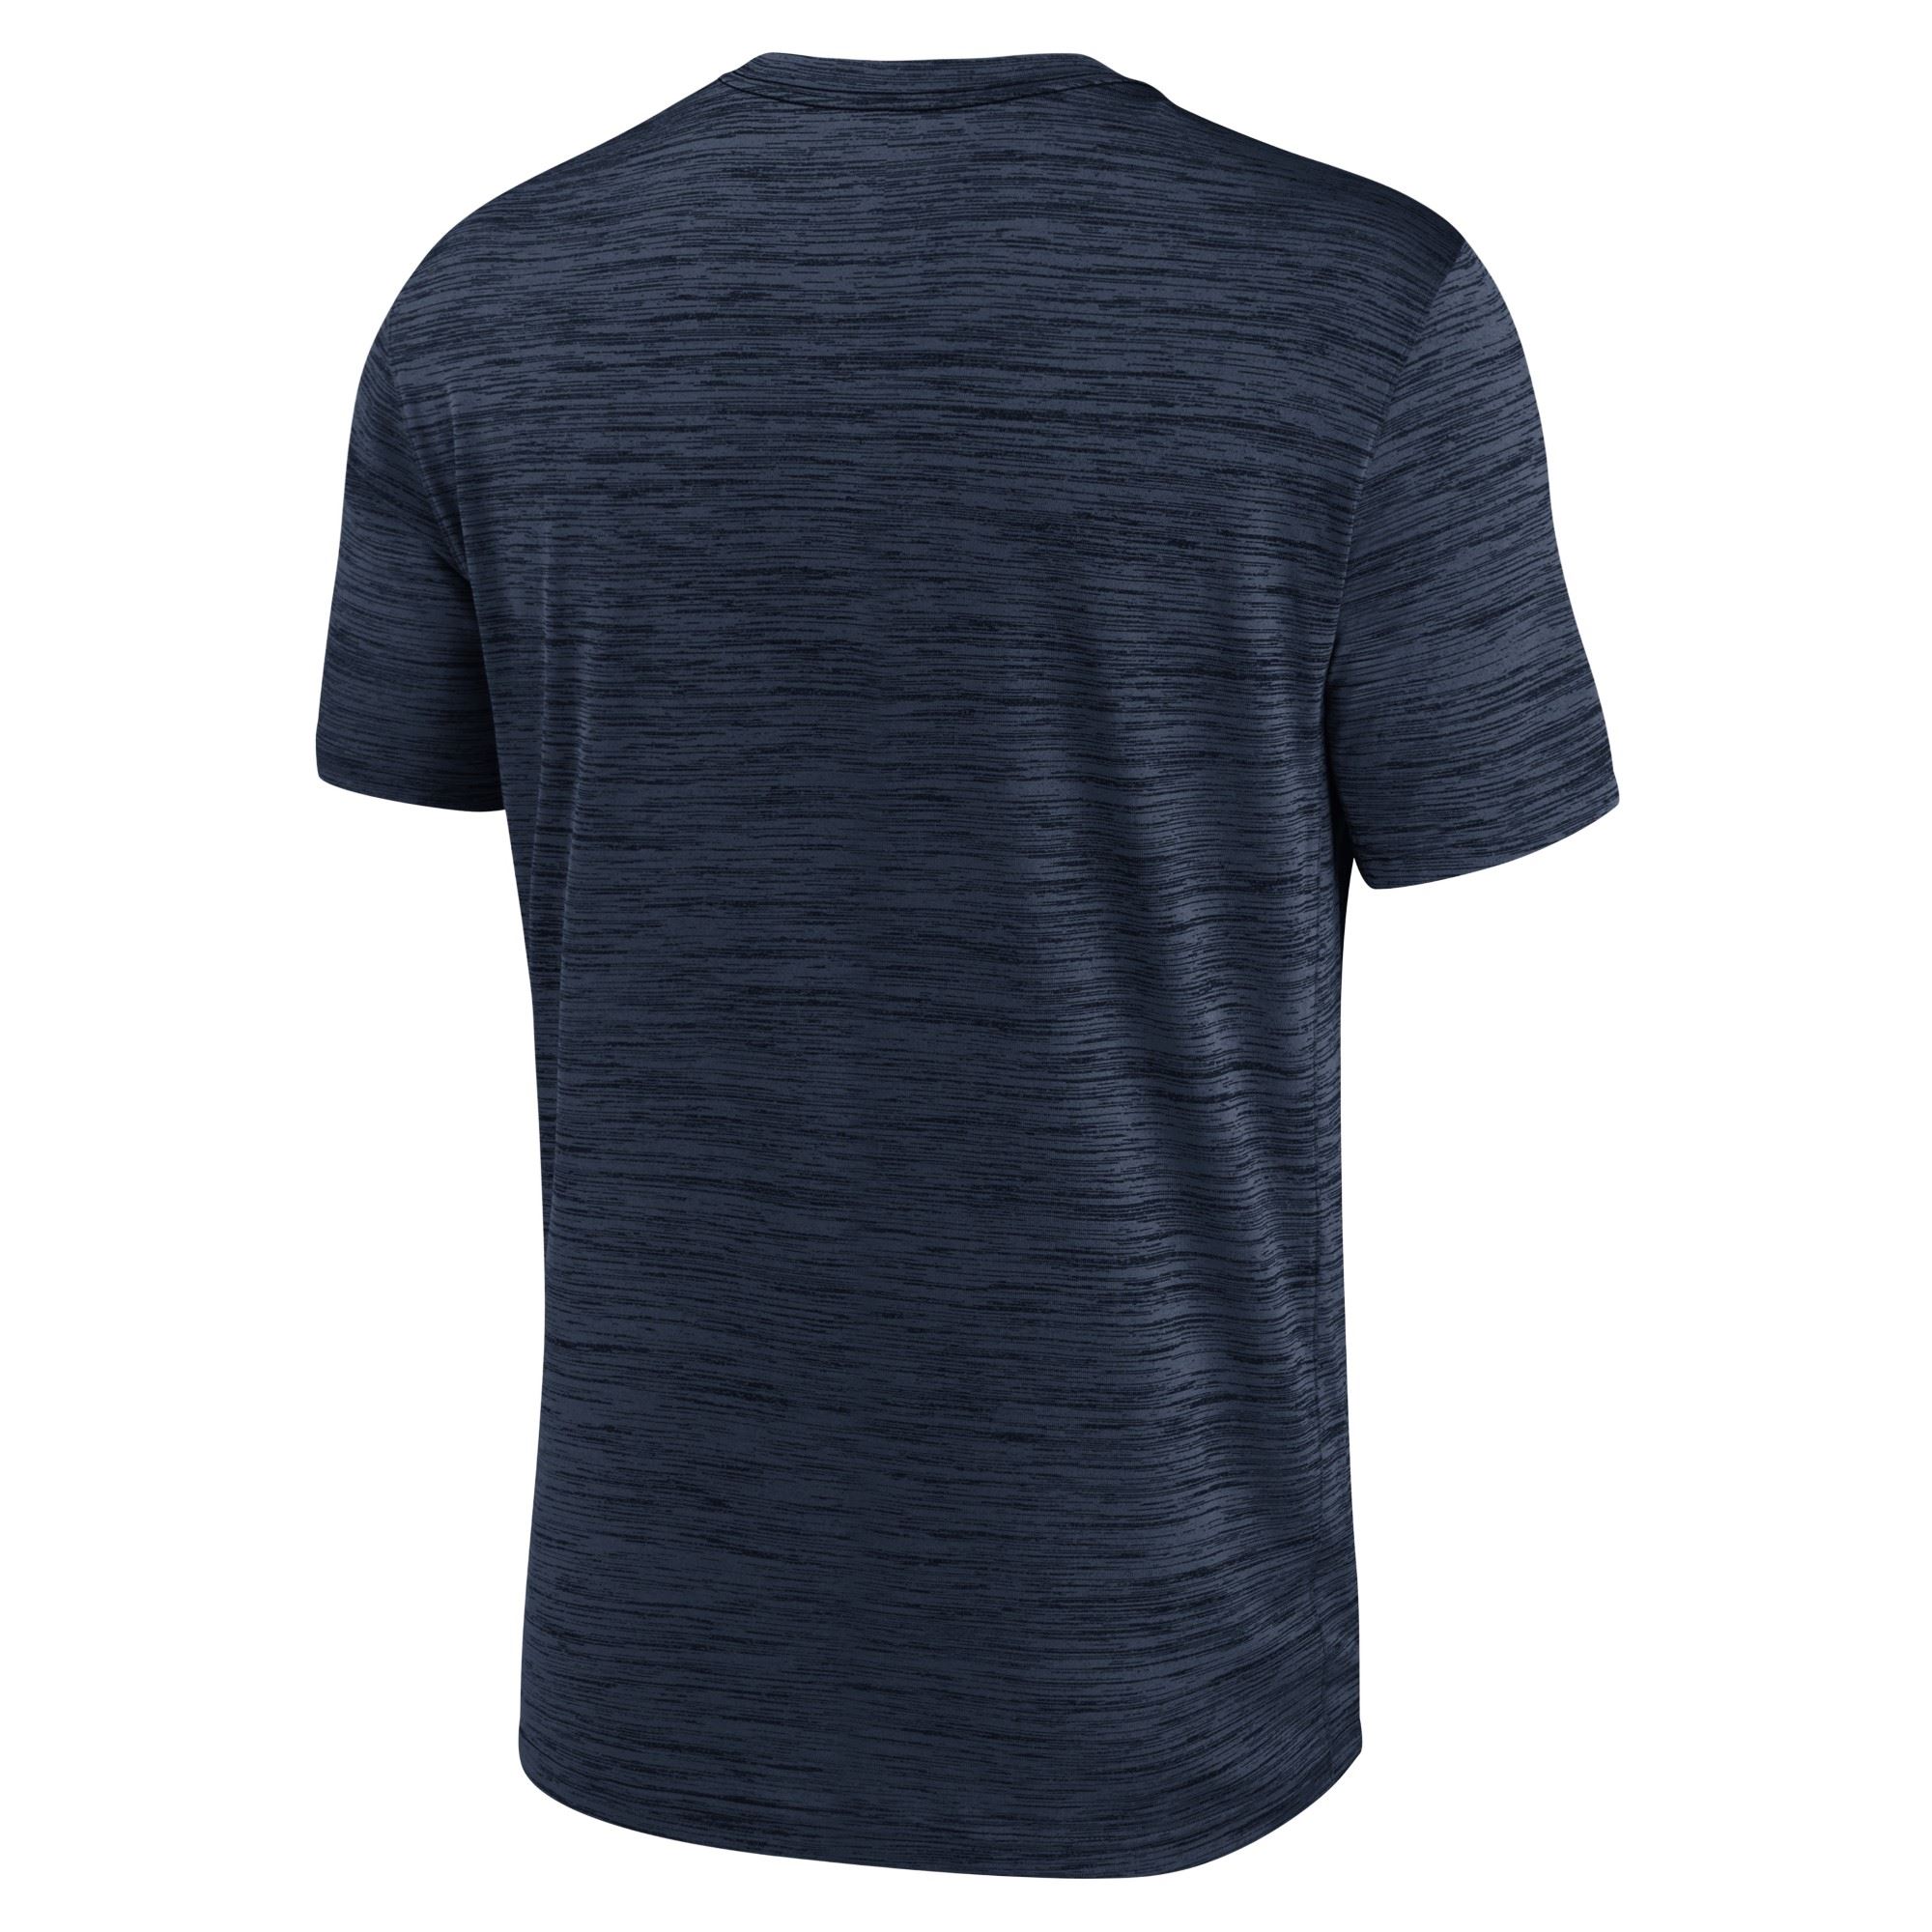 Seattle Seahawks Navy NFL Velocity Arch T-Shirt Nike 